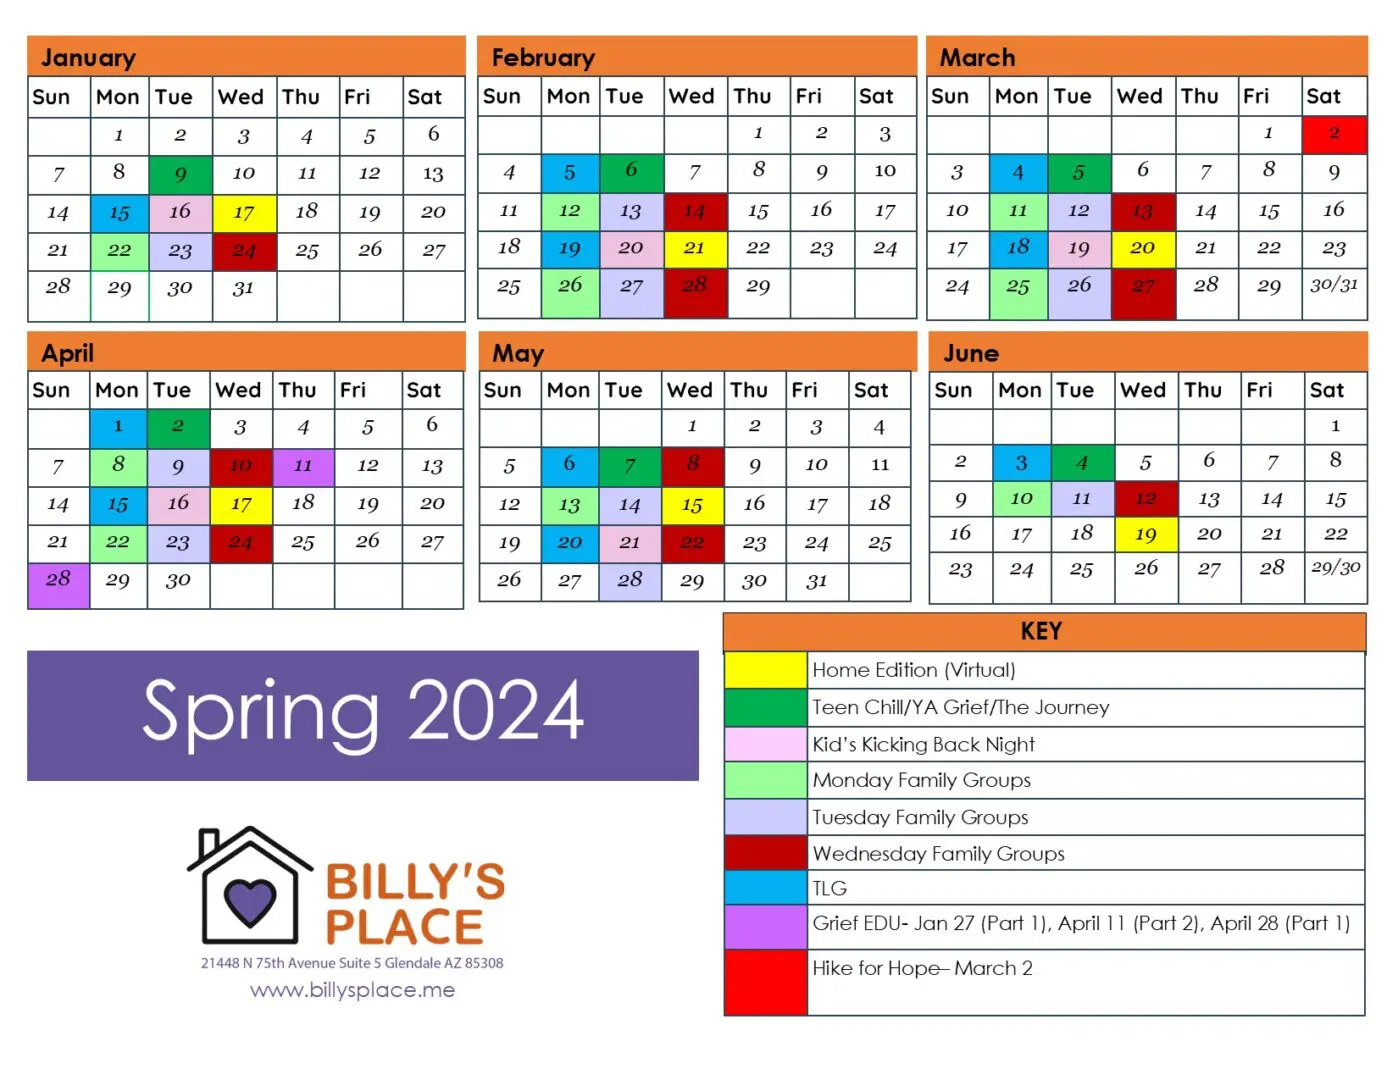 Spring 2024 Calendar Revised 4.9